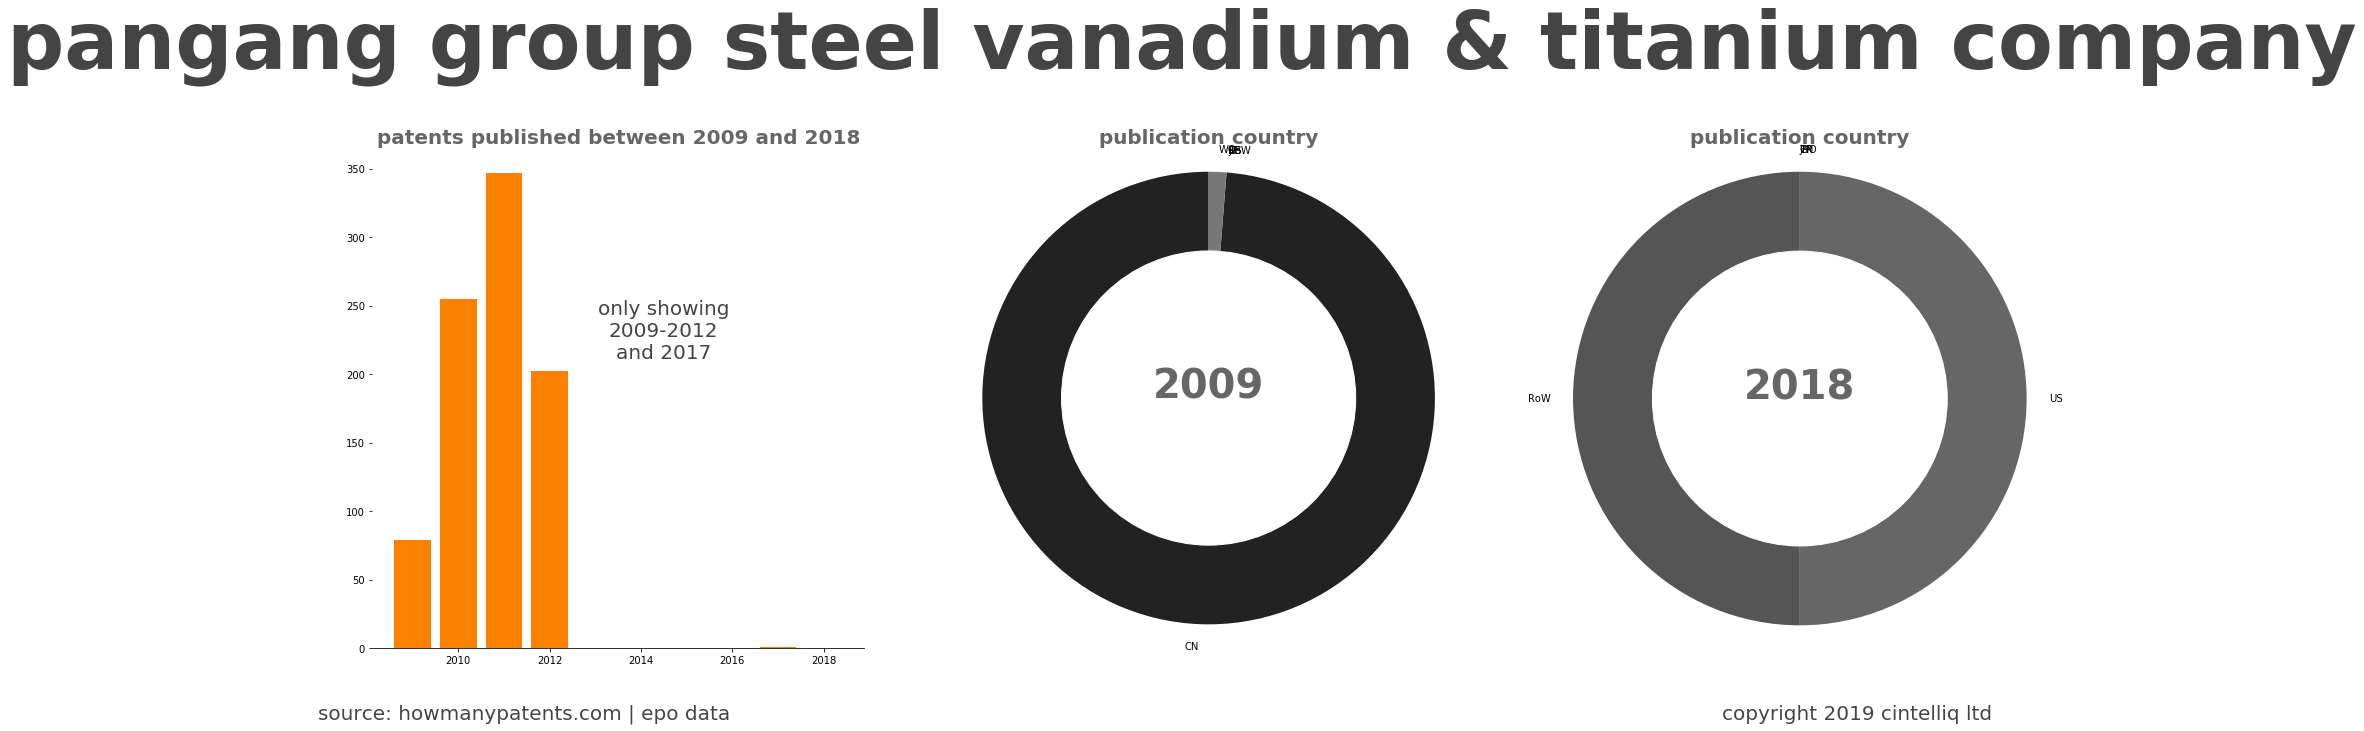 summary of patents for Pangang Group Steel Vanadium & Titanium Company